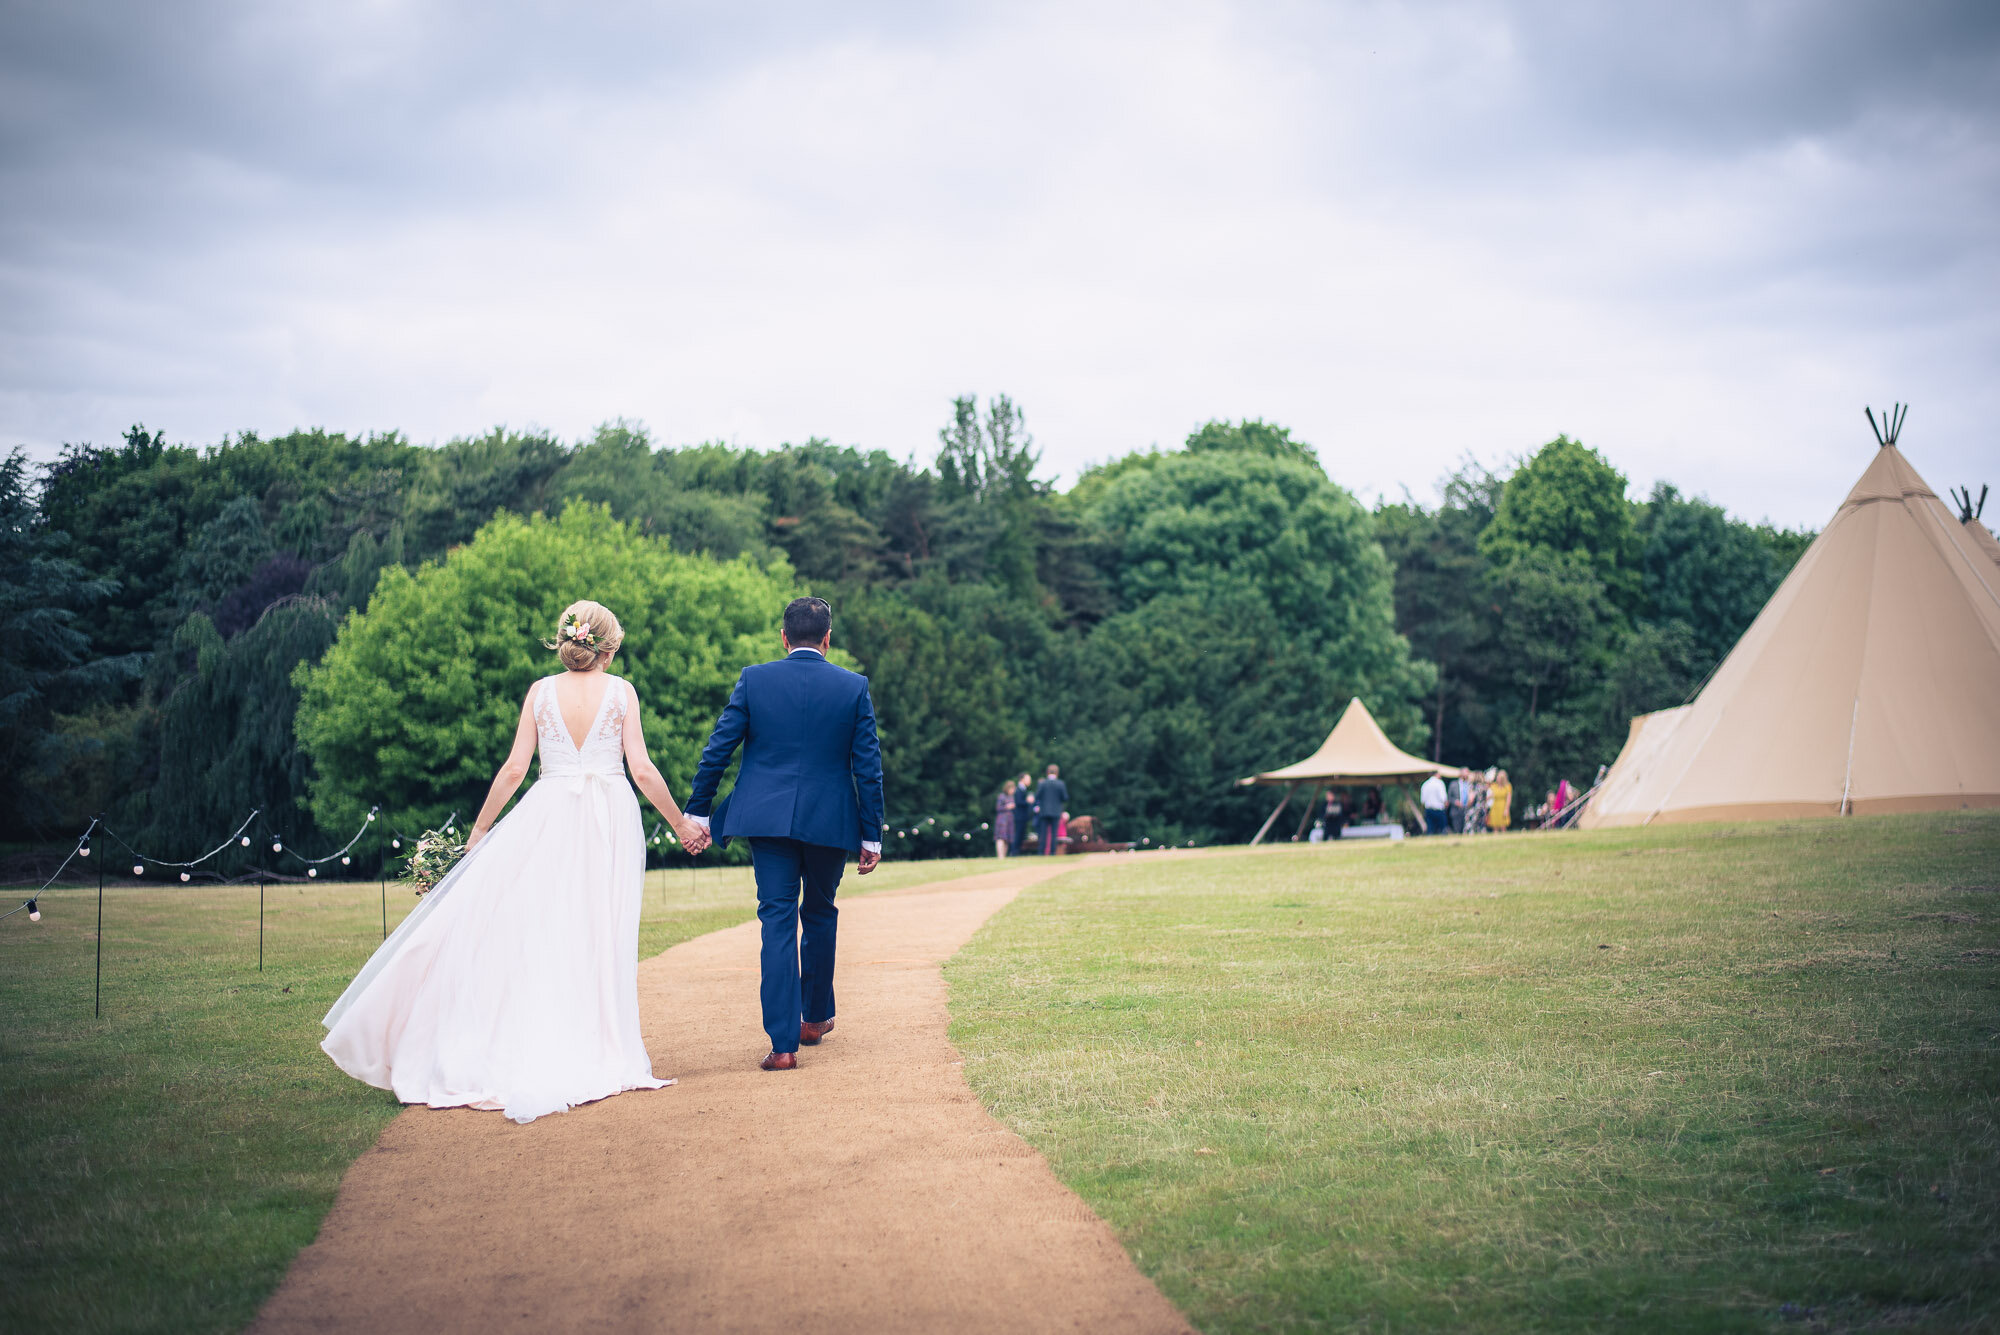 wedding-photography-country-tipis-hertford-hertfordshire-pike-photography-2020-20.jpg